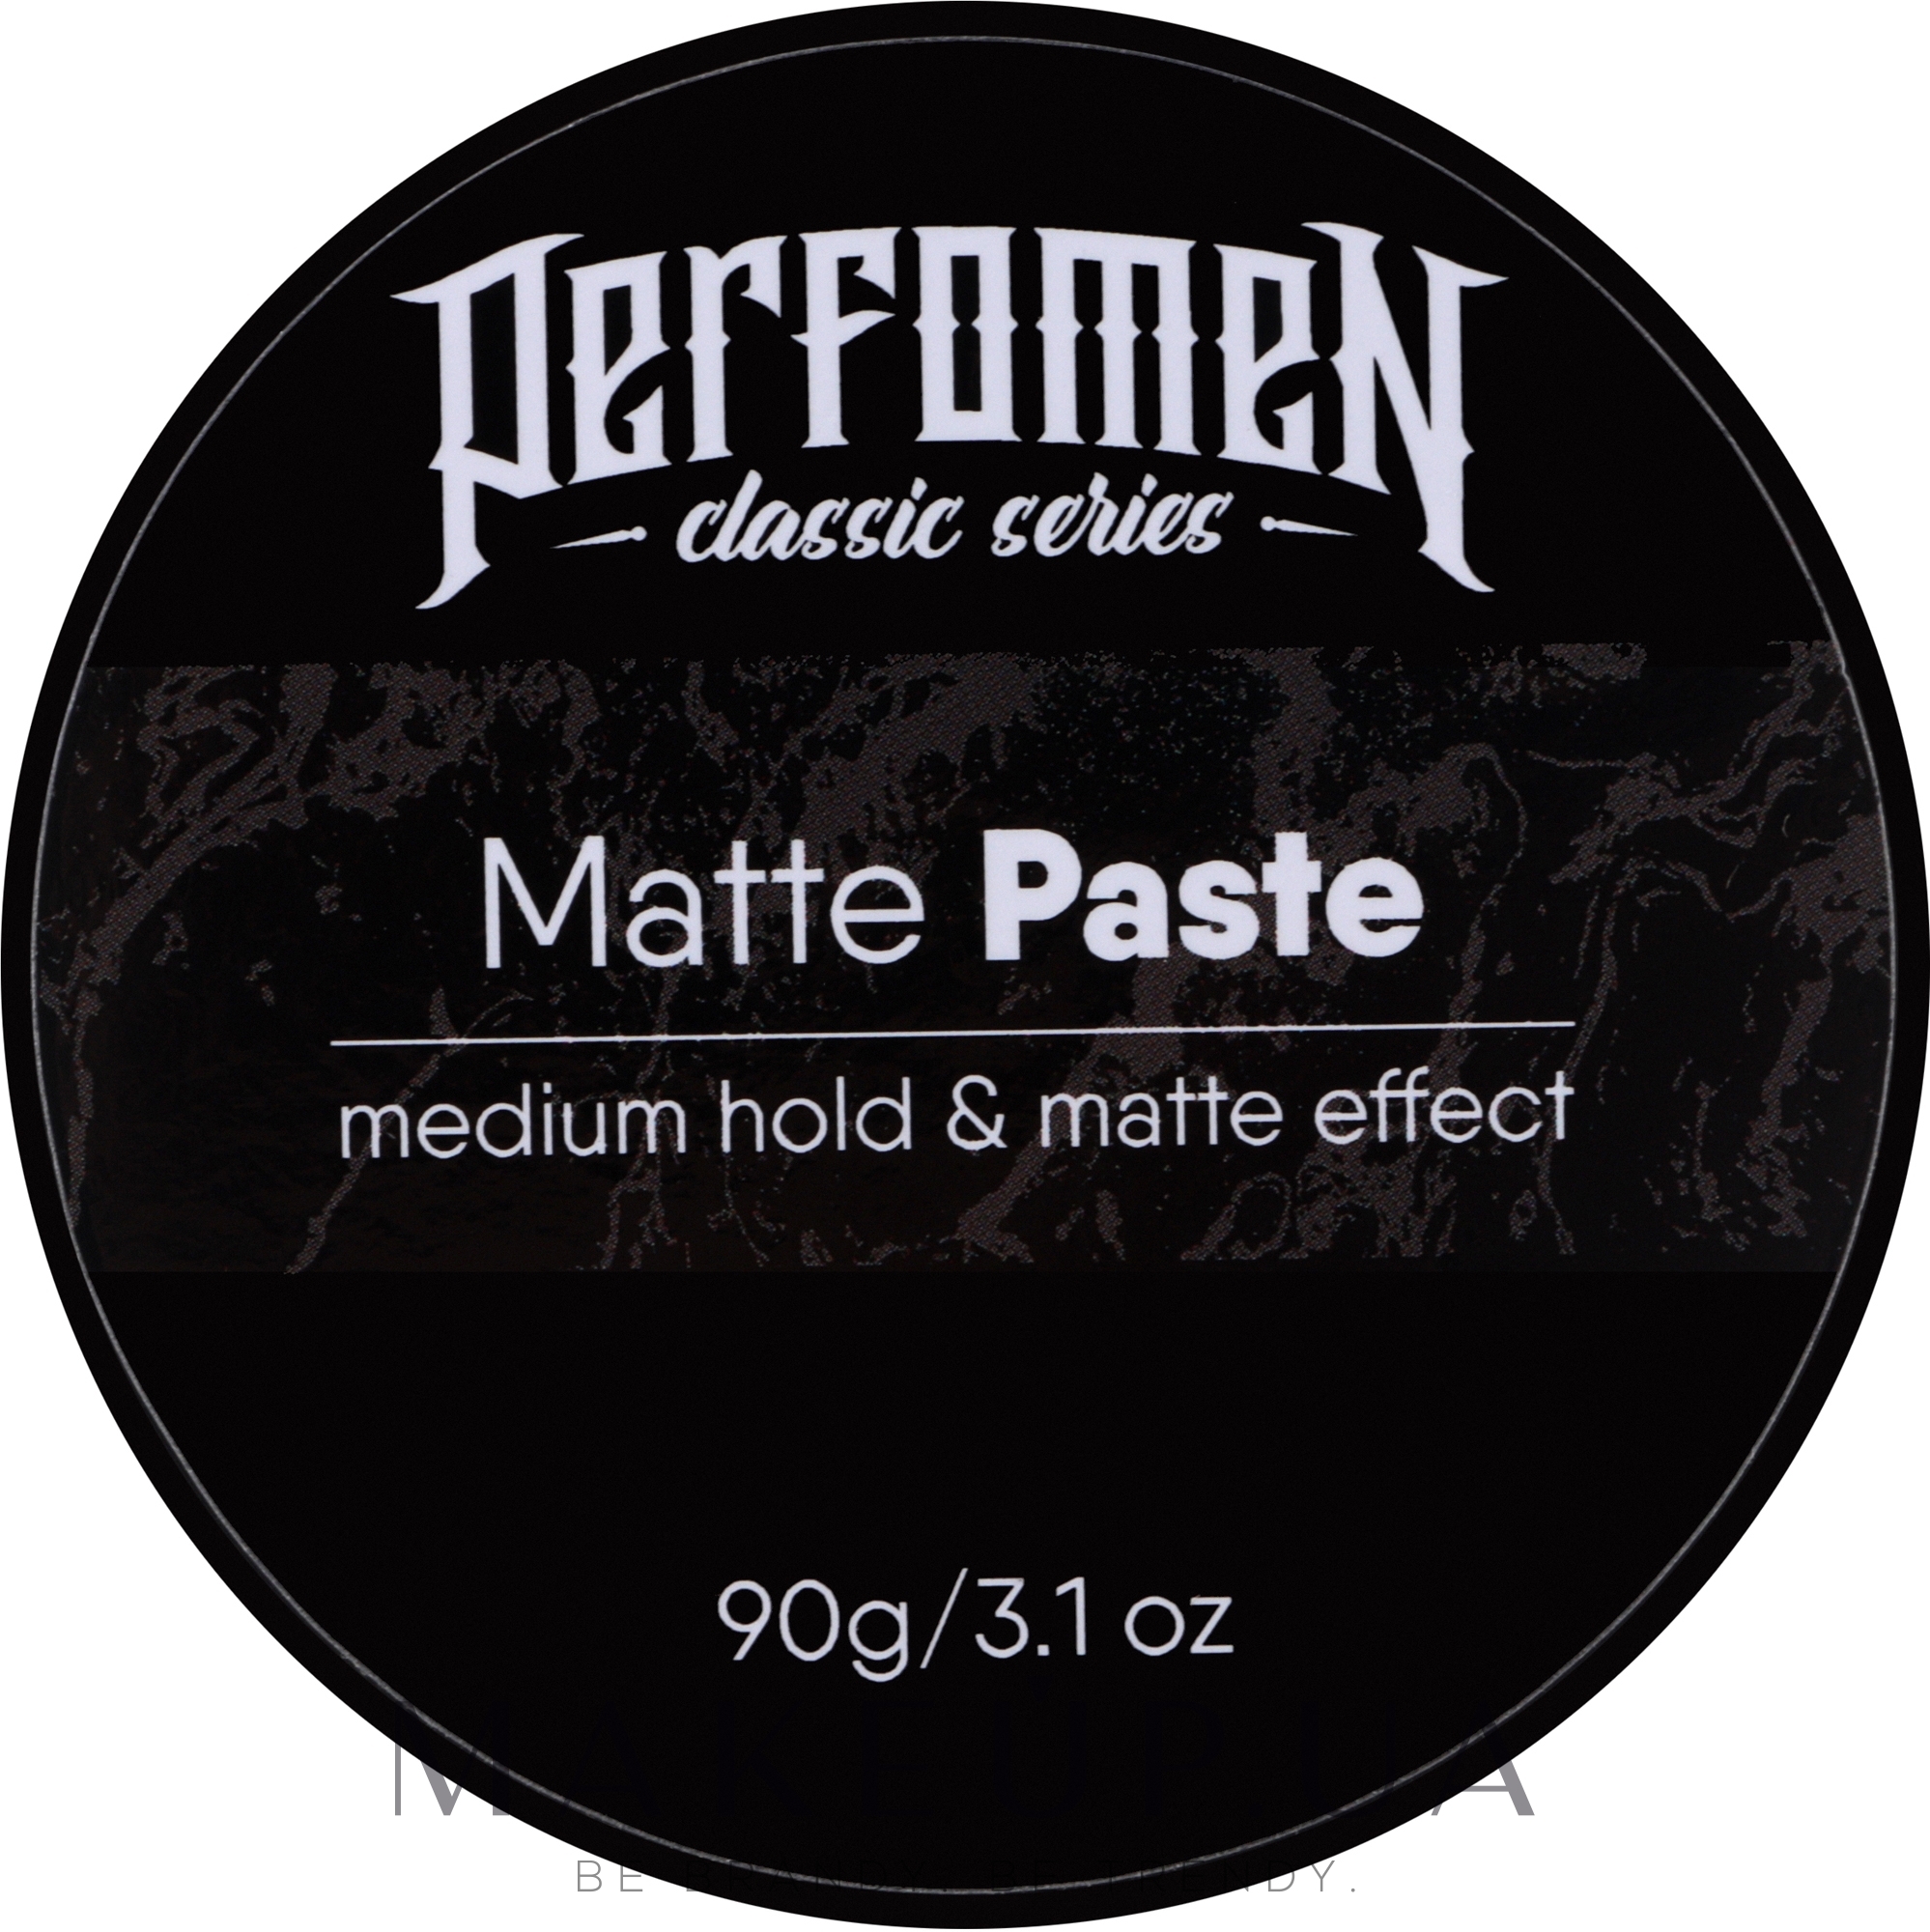 Матовая паста - Perfomen Classic Series Matte Paste  — фото 90g